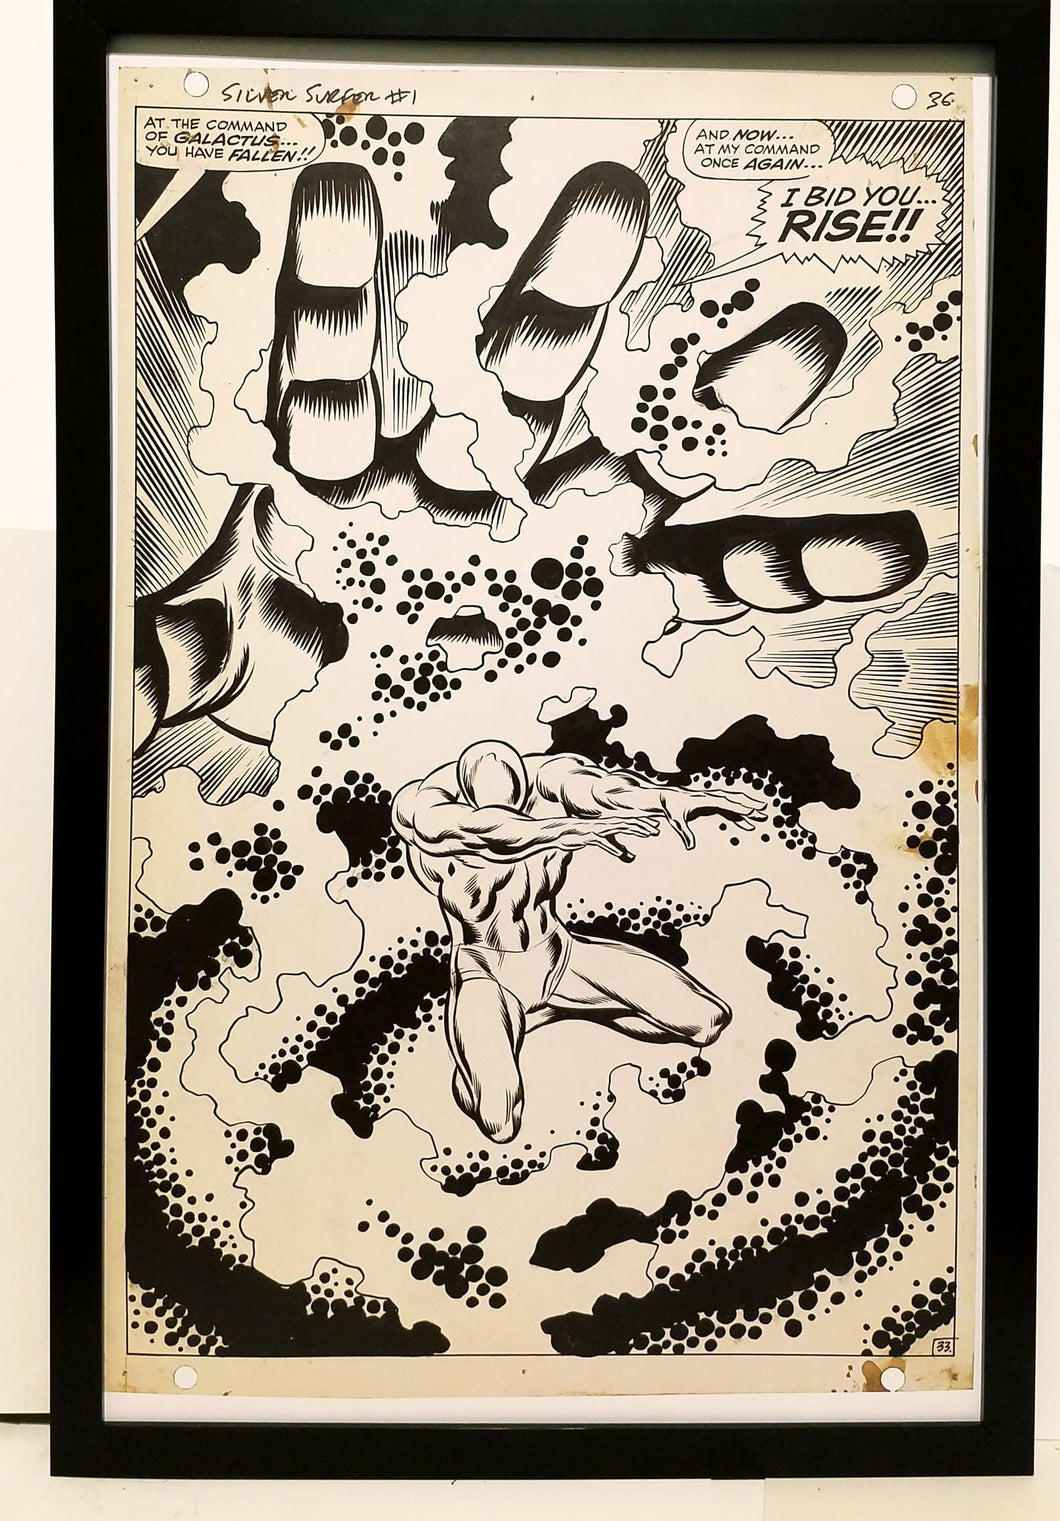 Silver Surfer #1 pg. 33 by John Buscema 11x17 FRAMED Original Art Poster Marvel Comics